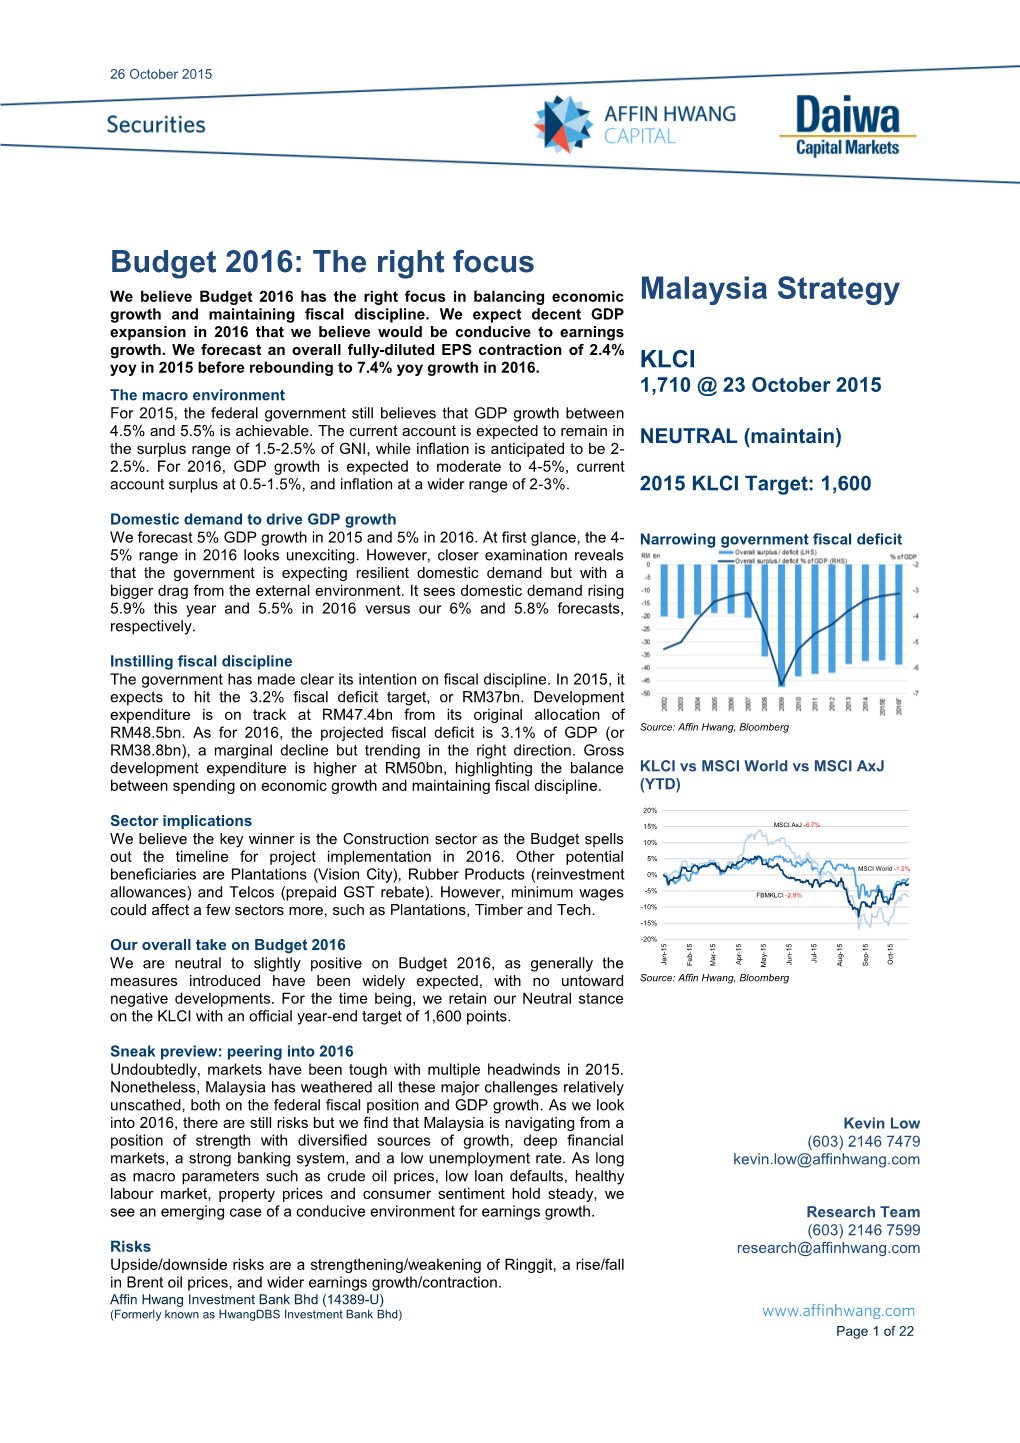 Budget 2015: a Balancing